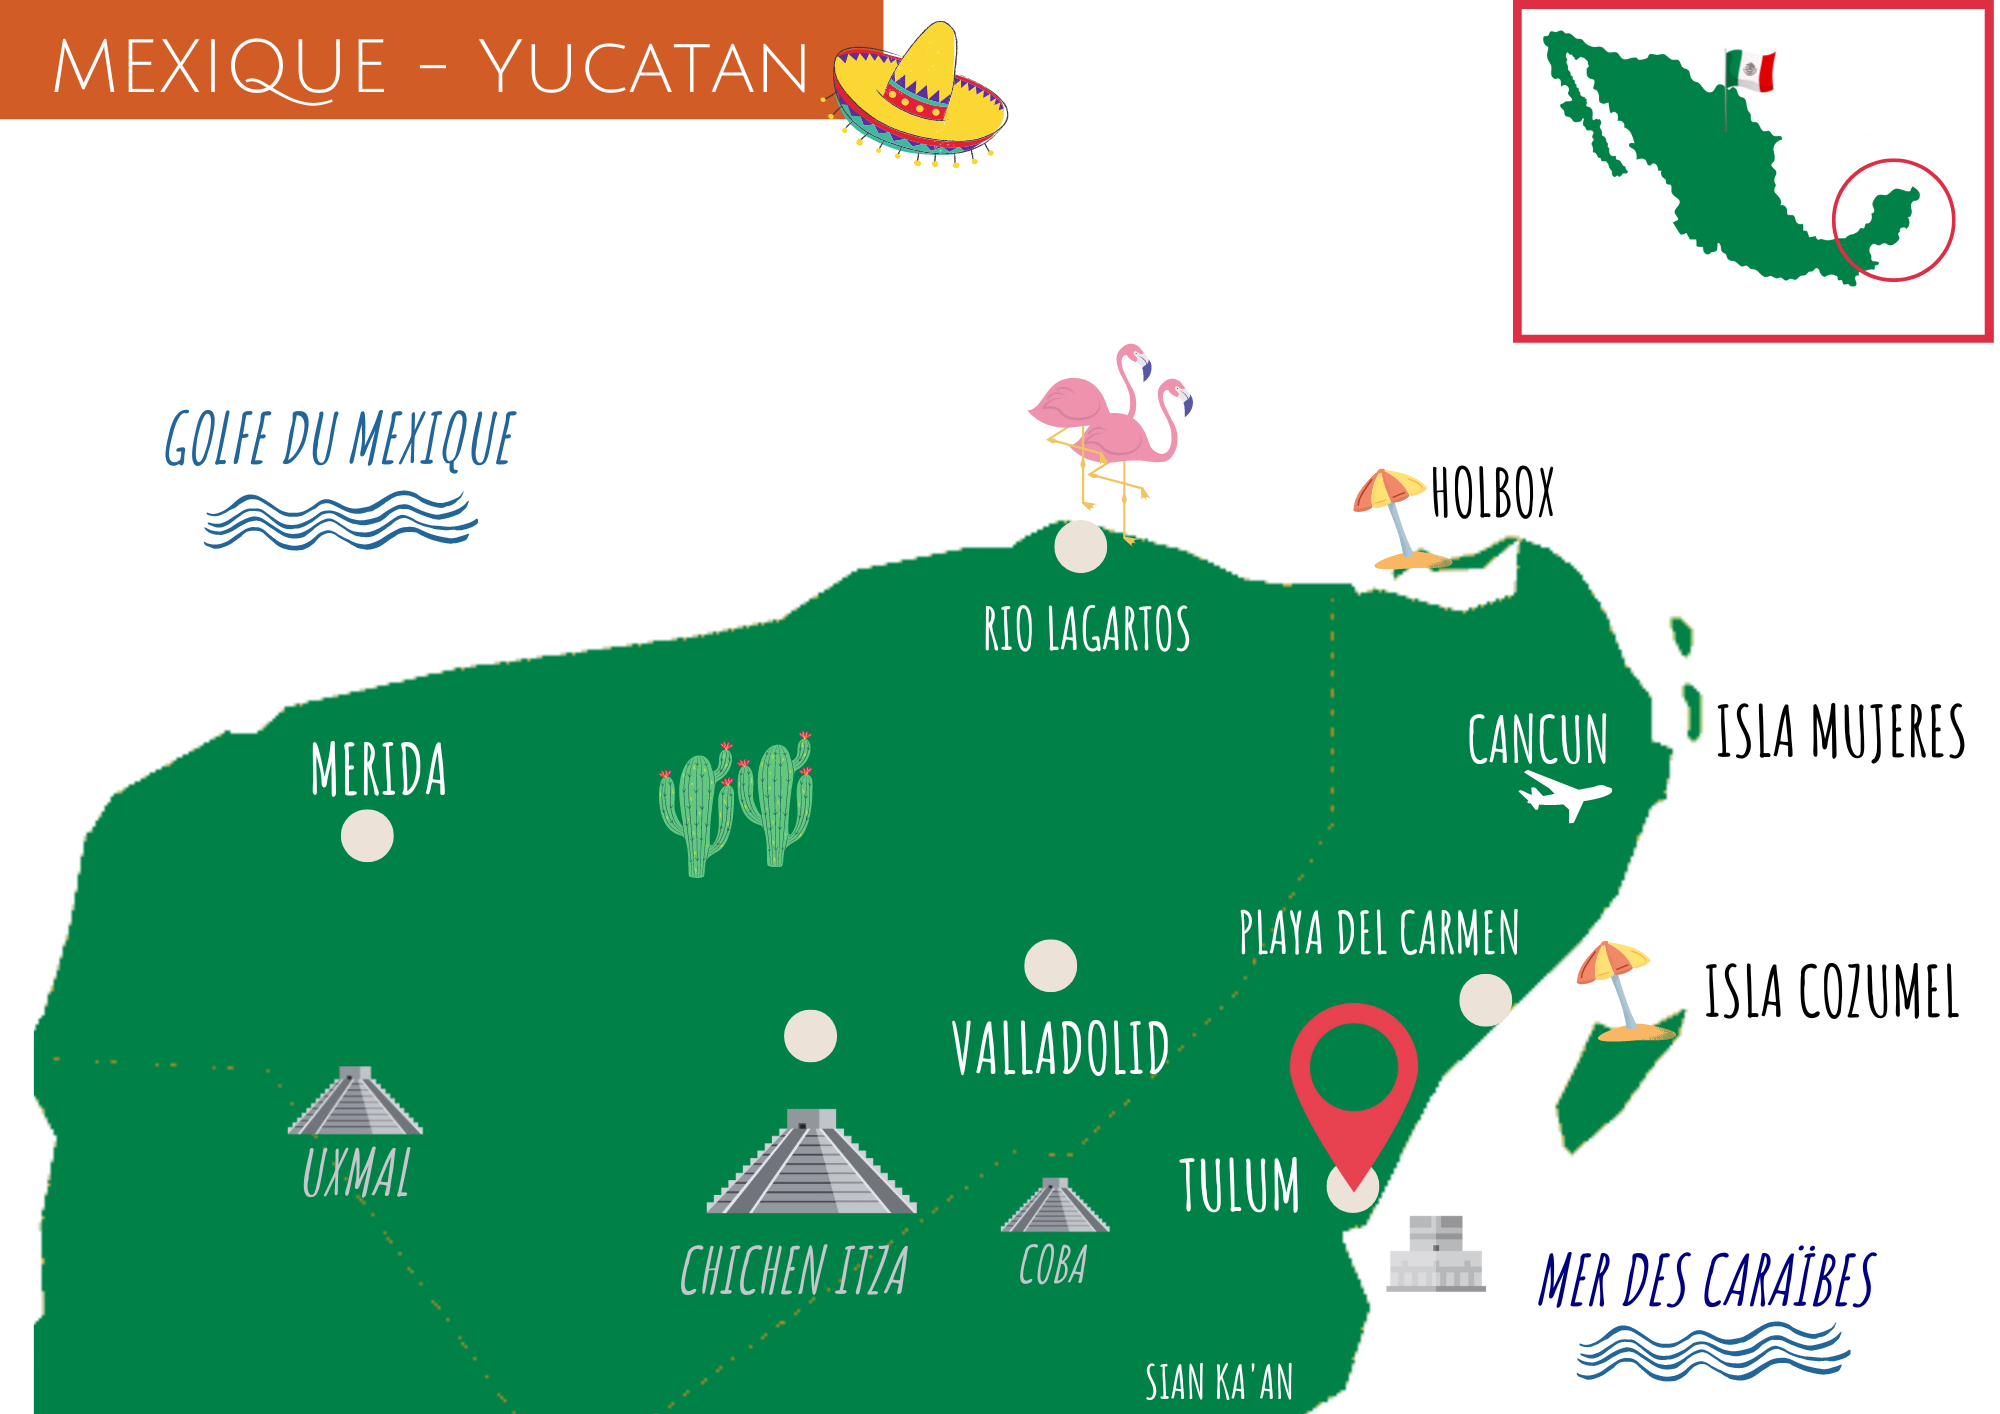 Tulum, mexique, yucatan